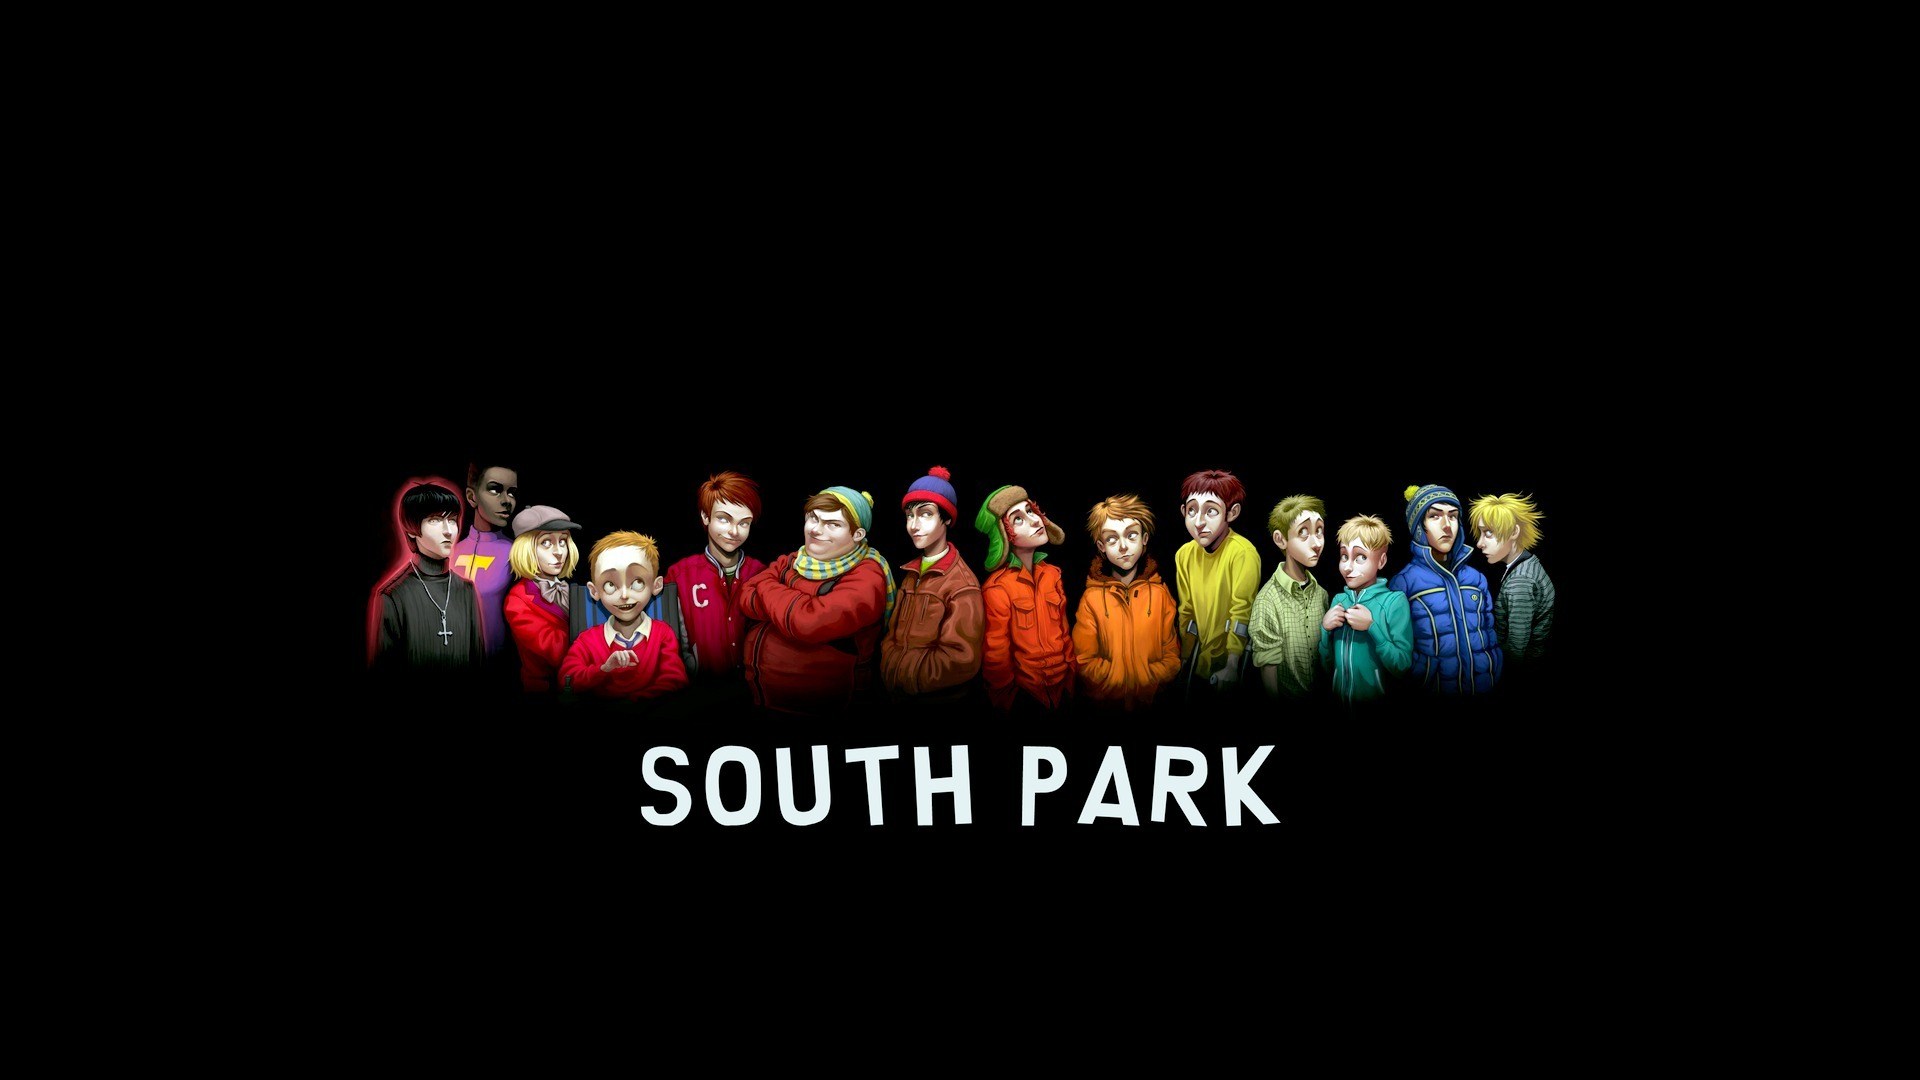 South Park Wallpapers HD | PixelsTalk.Net